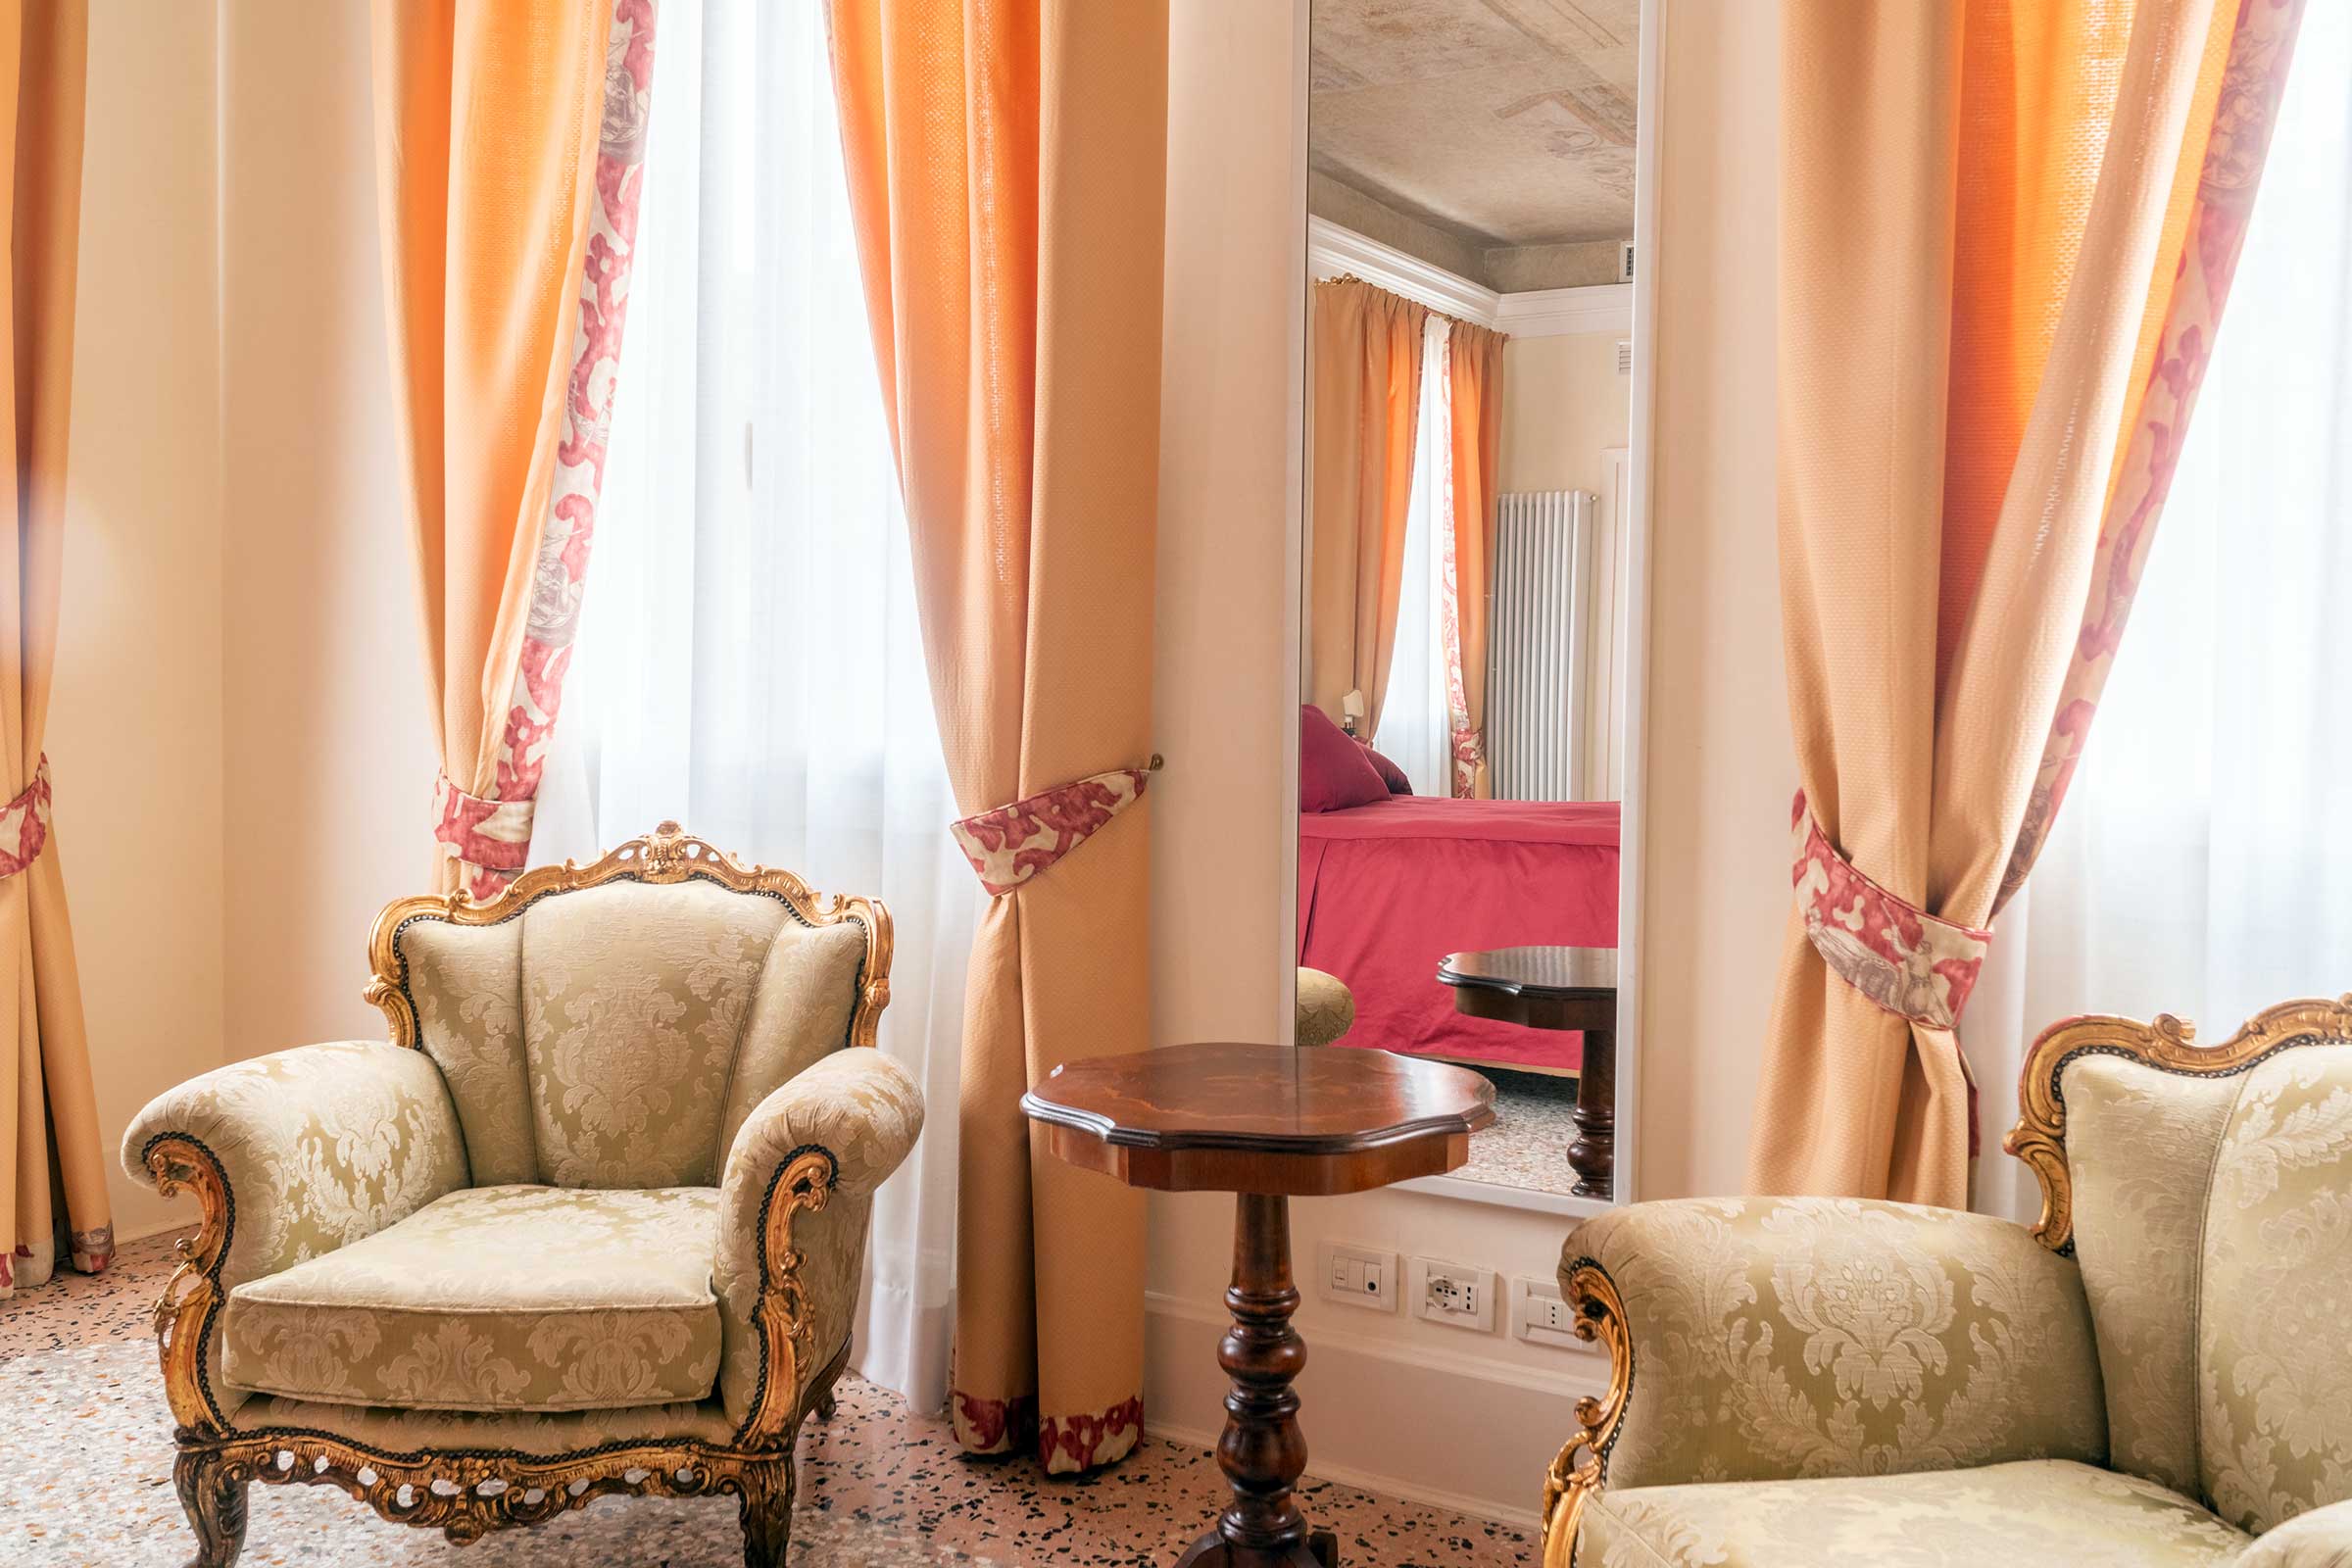 Alighieri "D" luxury master bedroom with en-suite bathroom